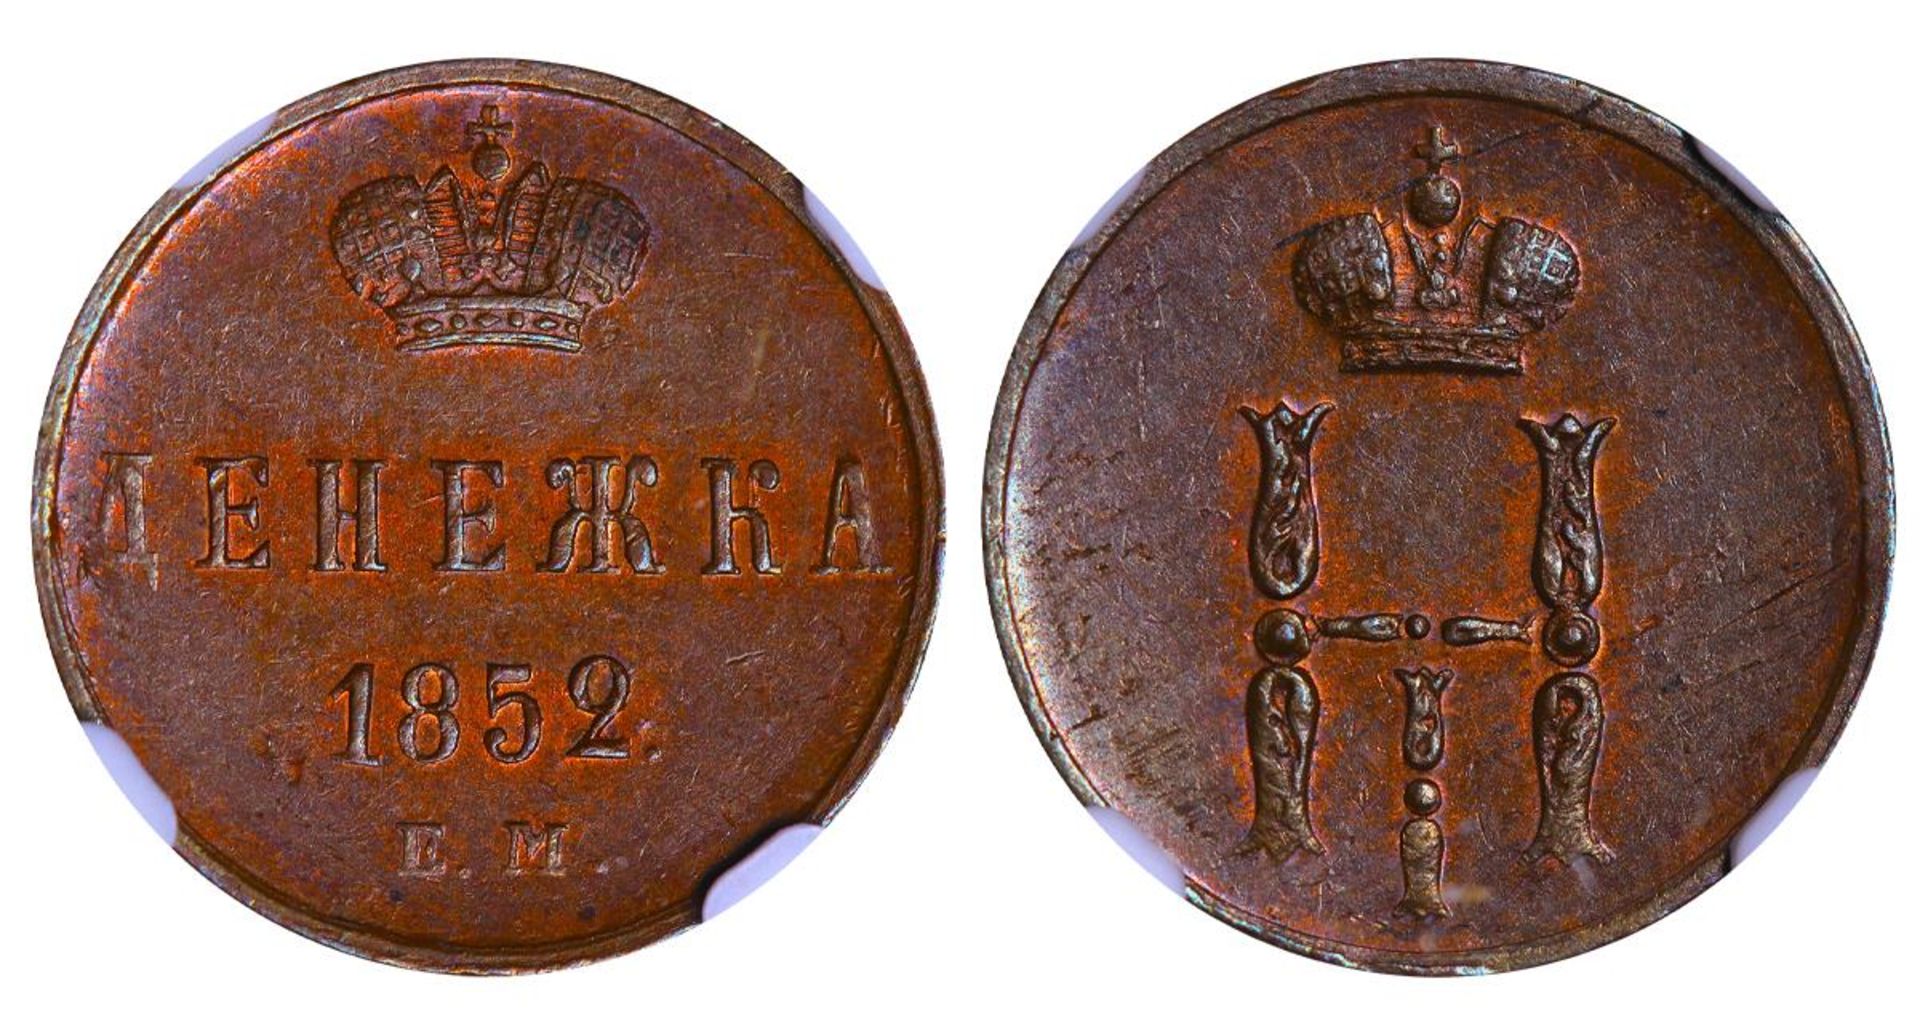 Russian Empire, 1 Denga, 1852 year, EM, NGC, MS 62 BN